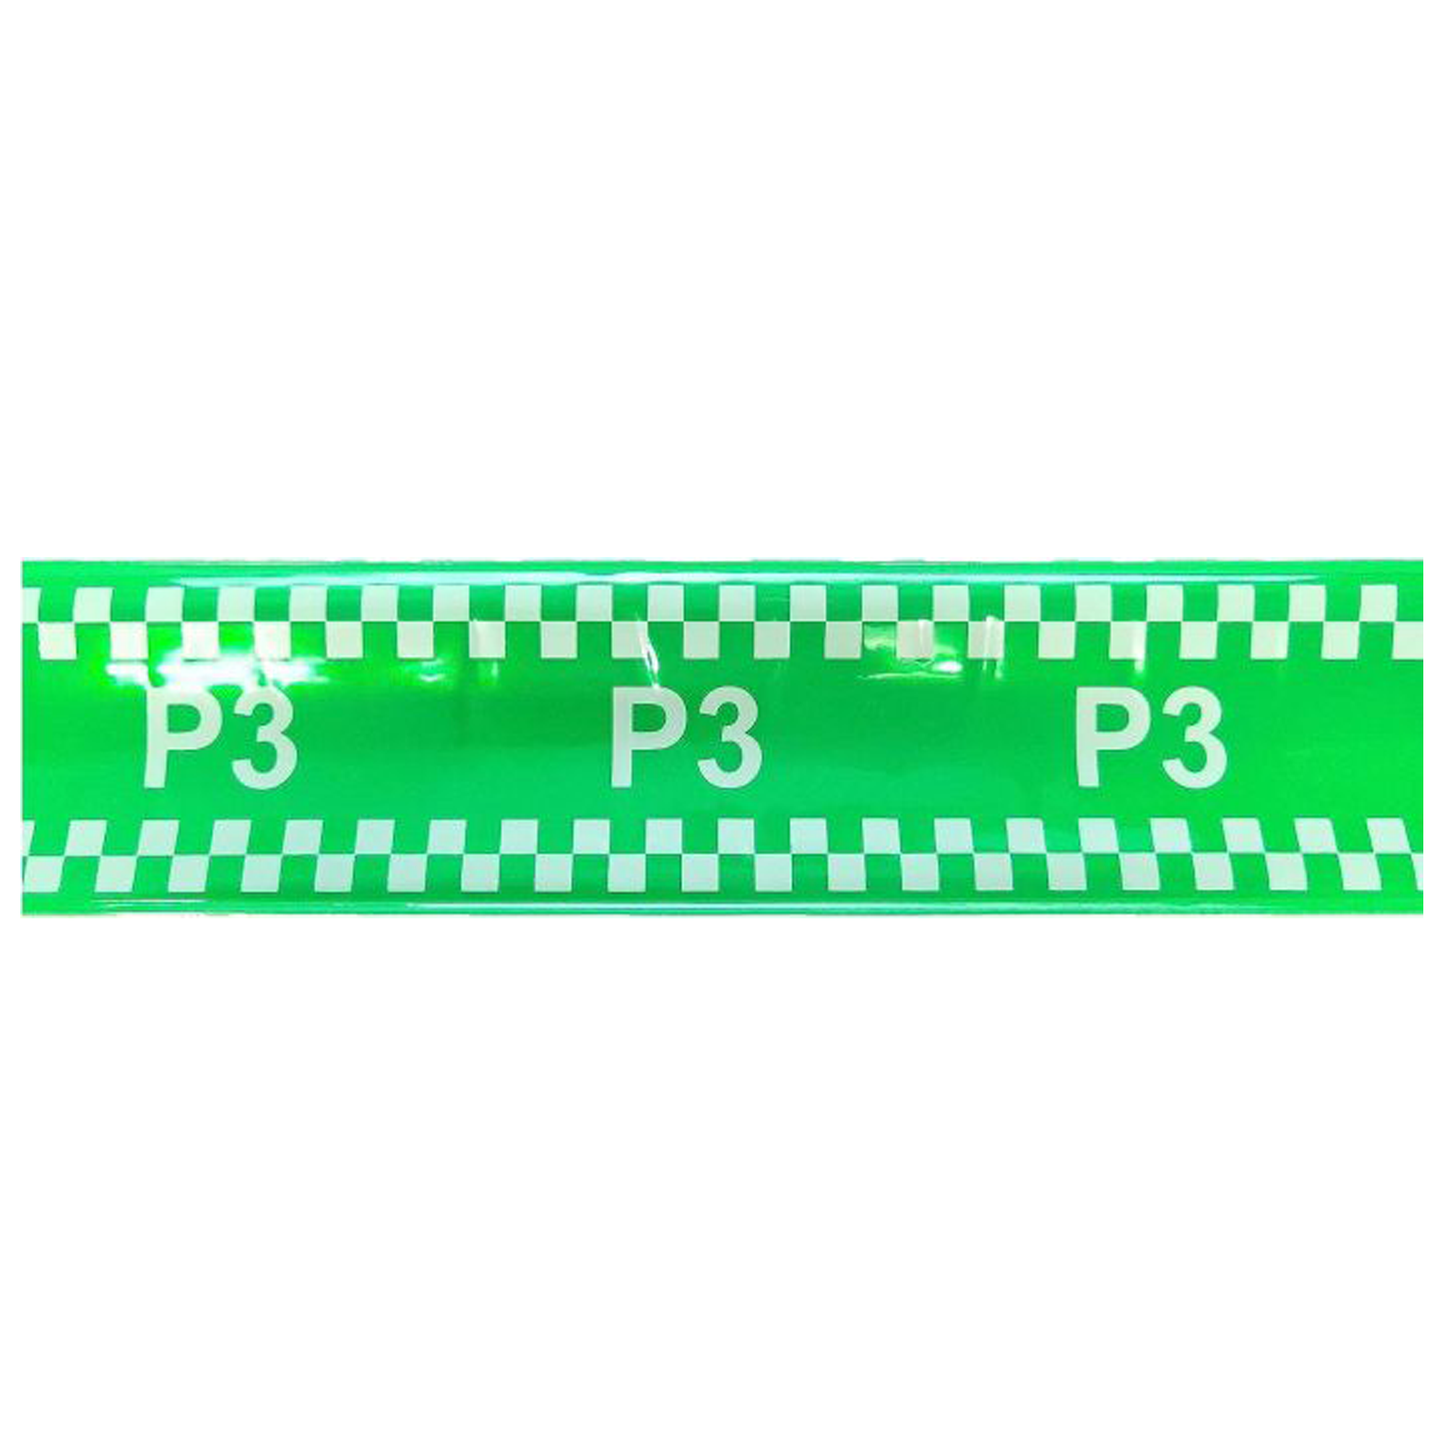 NHS Ten Second Triage (TST) Slap Band - P3 Green